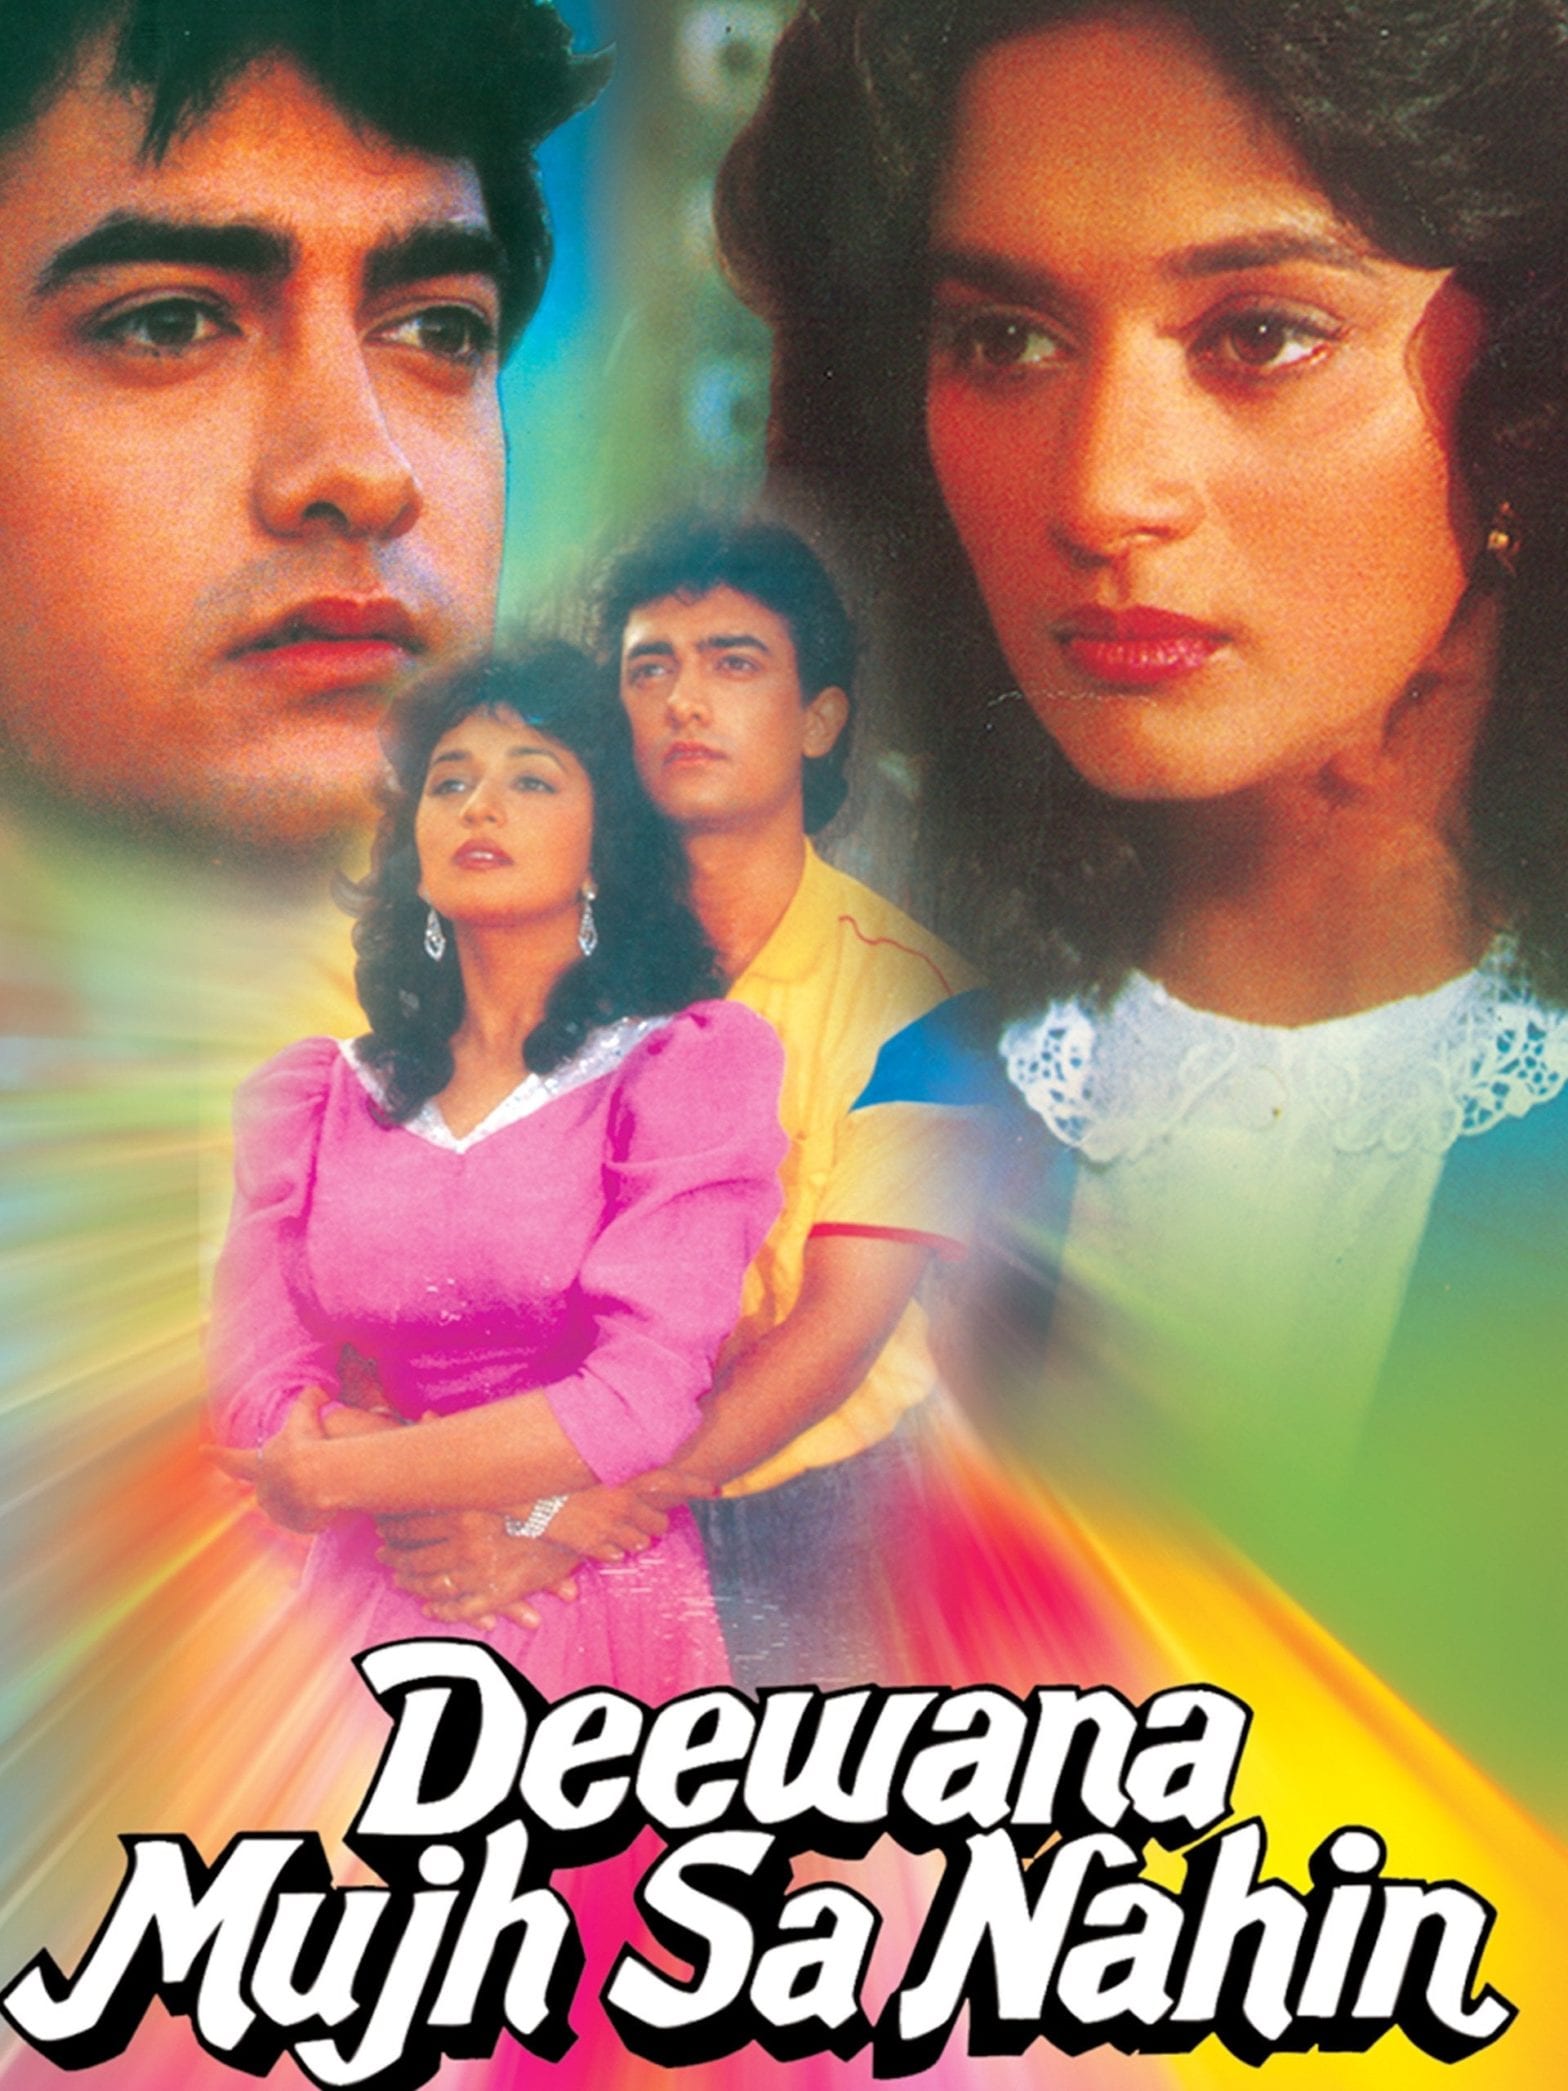 Poster for the movie "Deewana Mujh Sa Nahin"